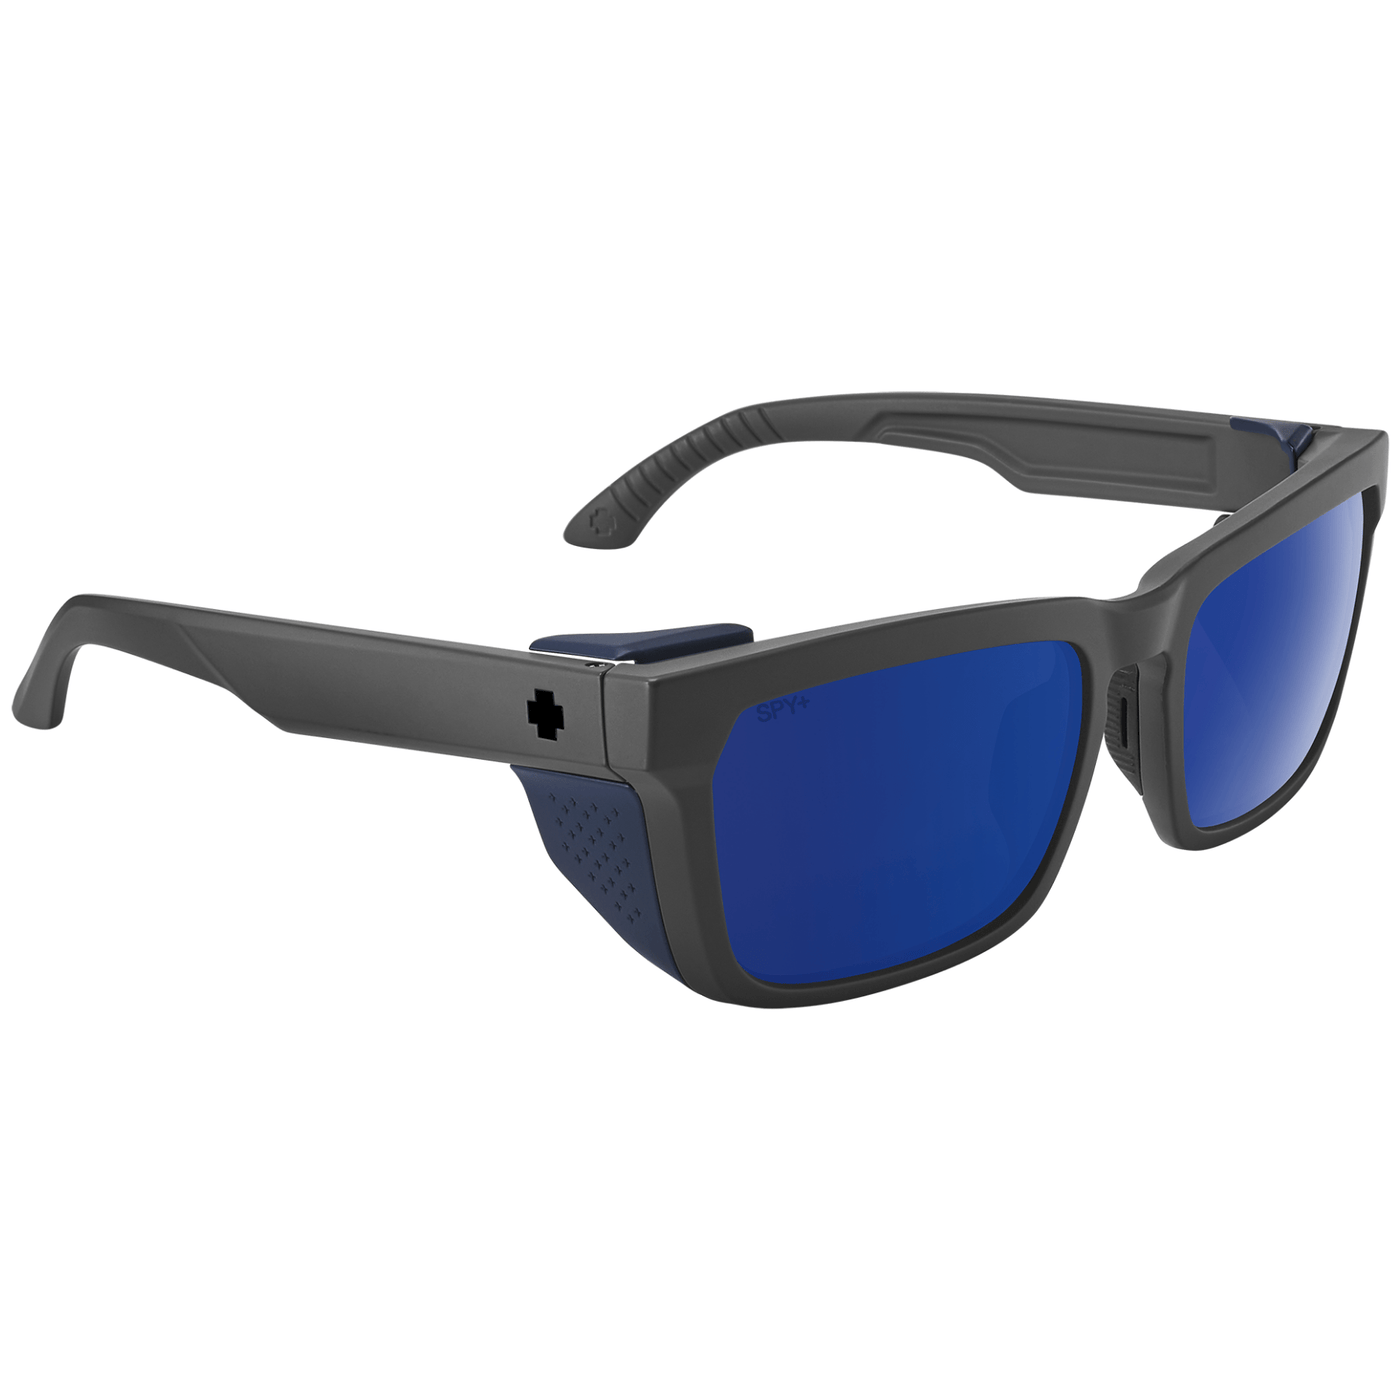 HELM TECH polarized sunglasses - dark blue